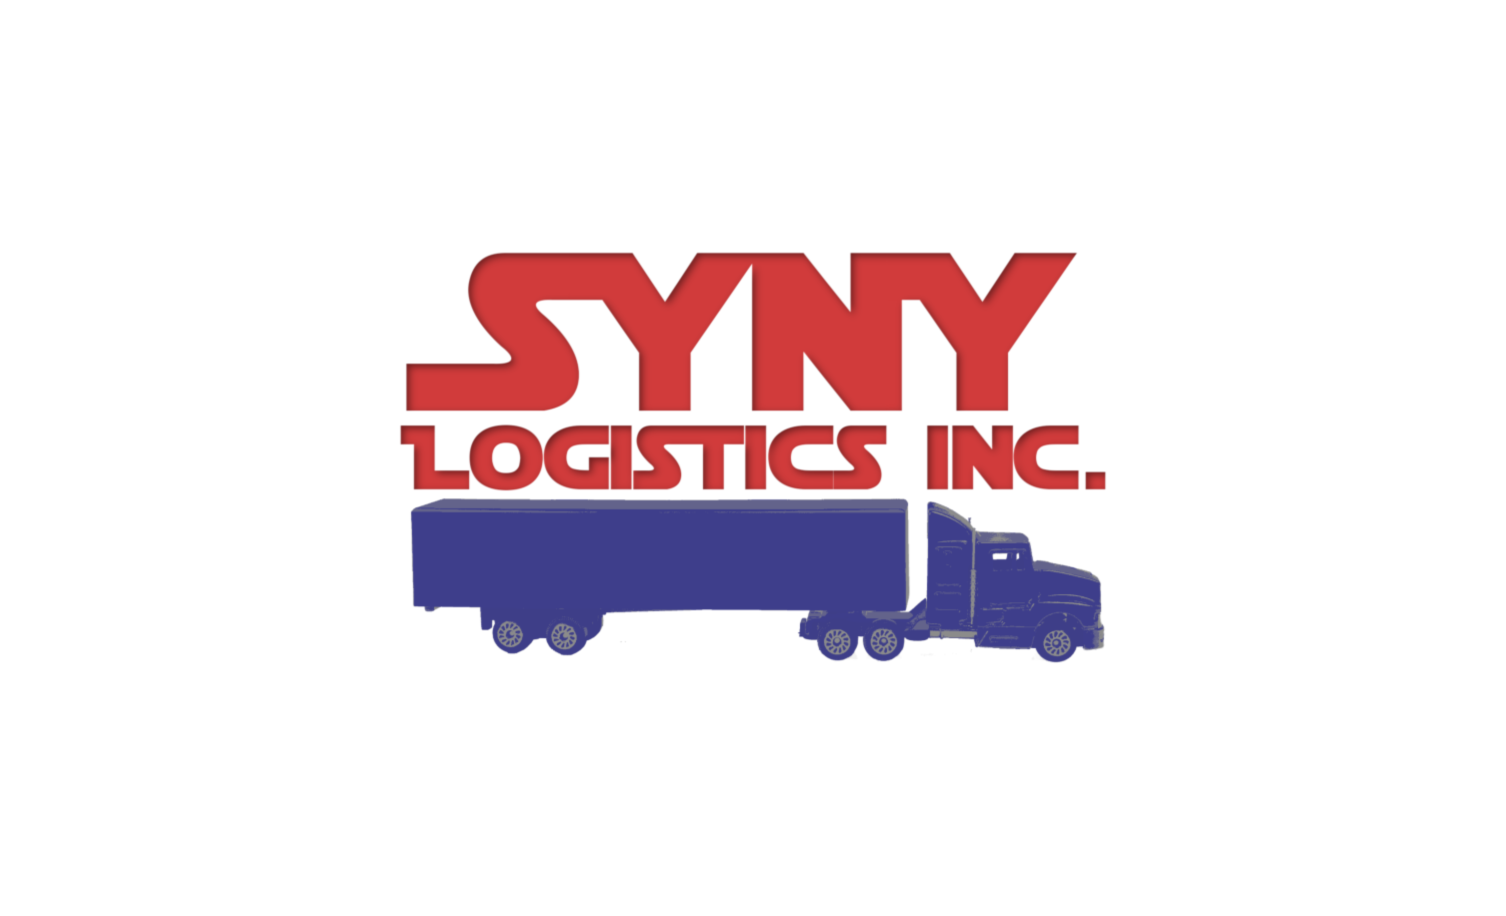 SYNY Logistics Inc.